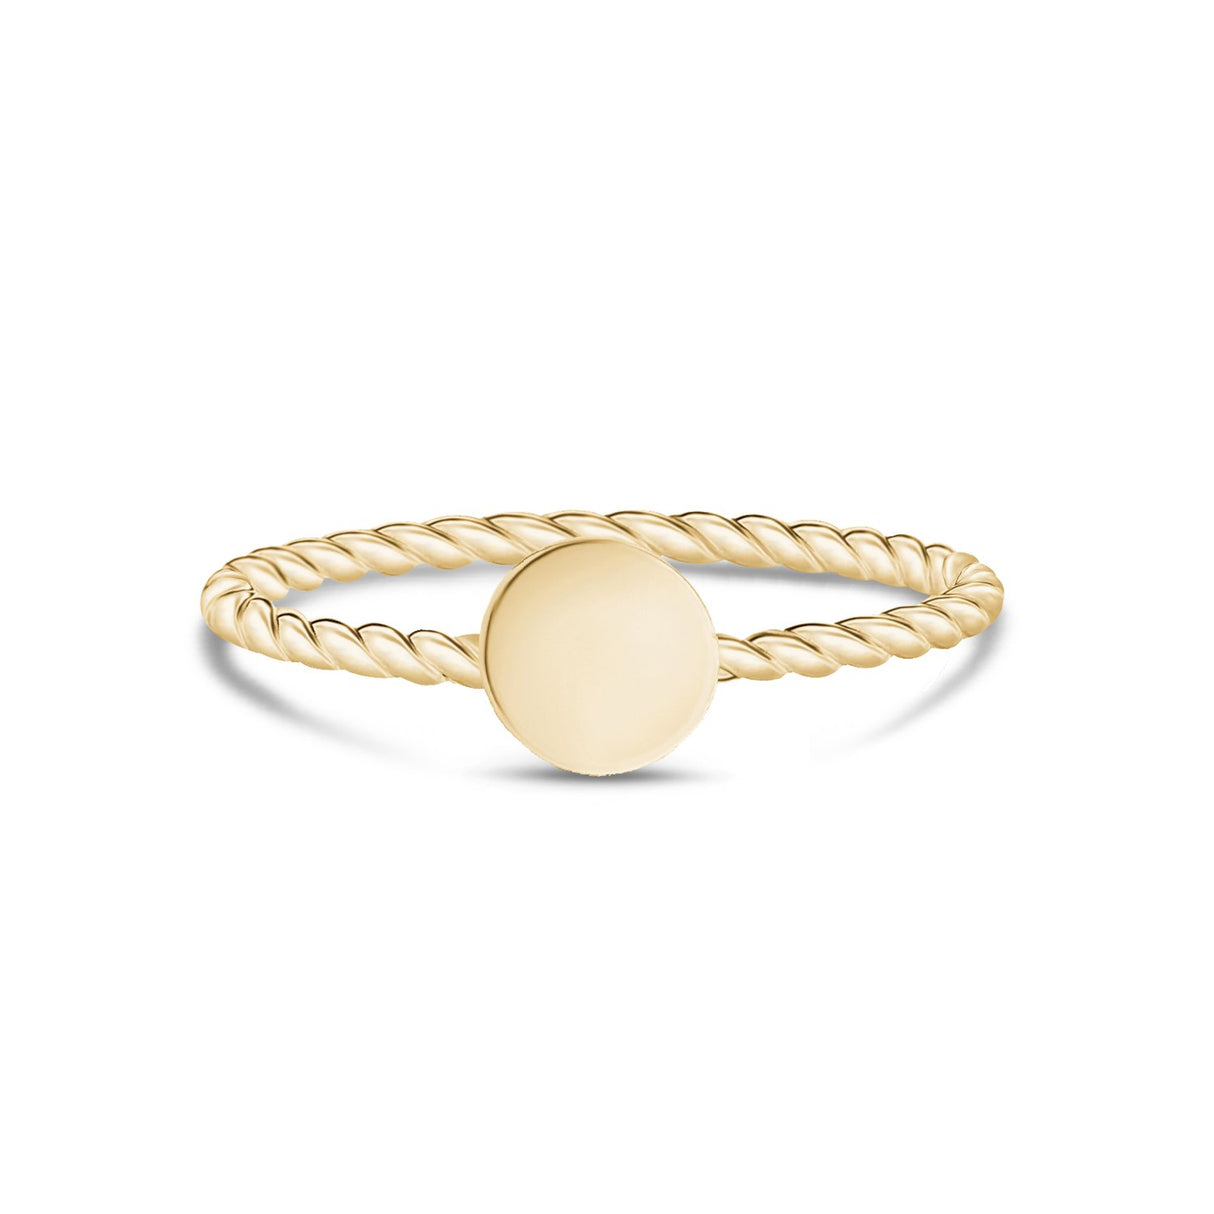 Frauen Ring - Minimal Gold Stahl Twisted Band Runde gravierbar Ring